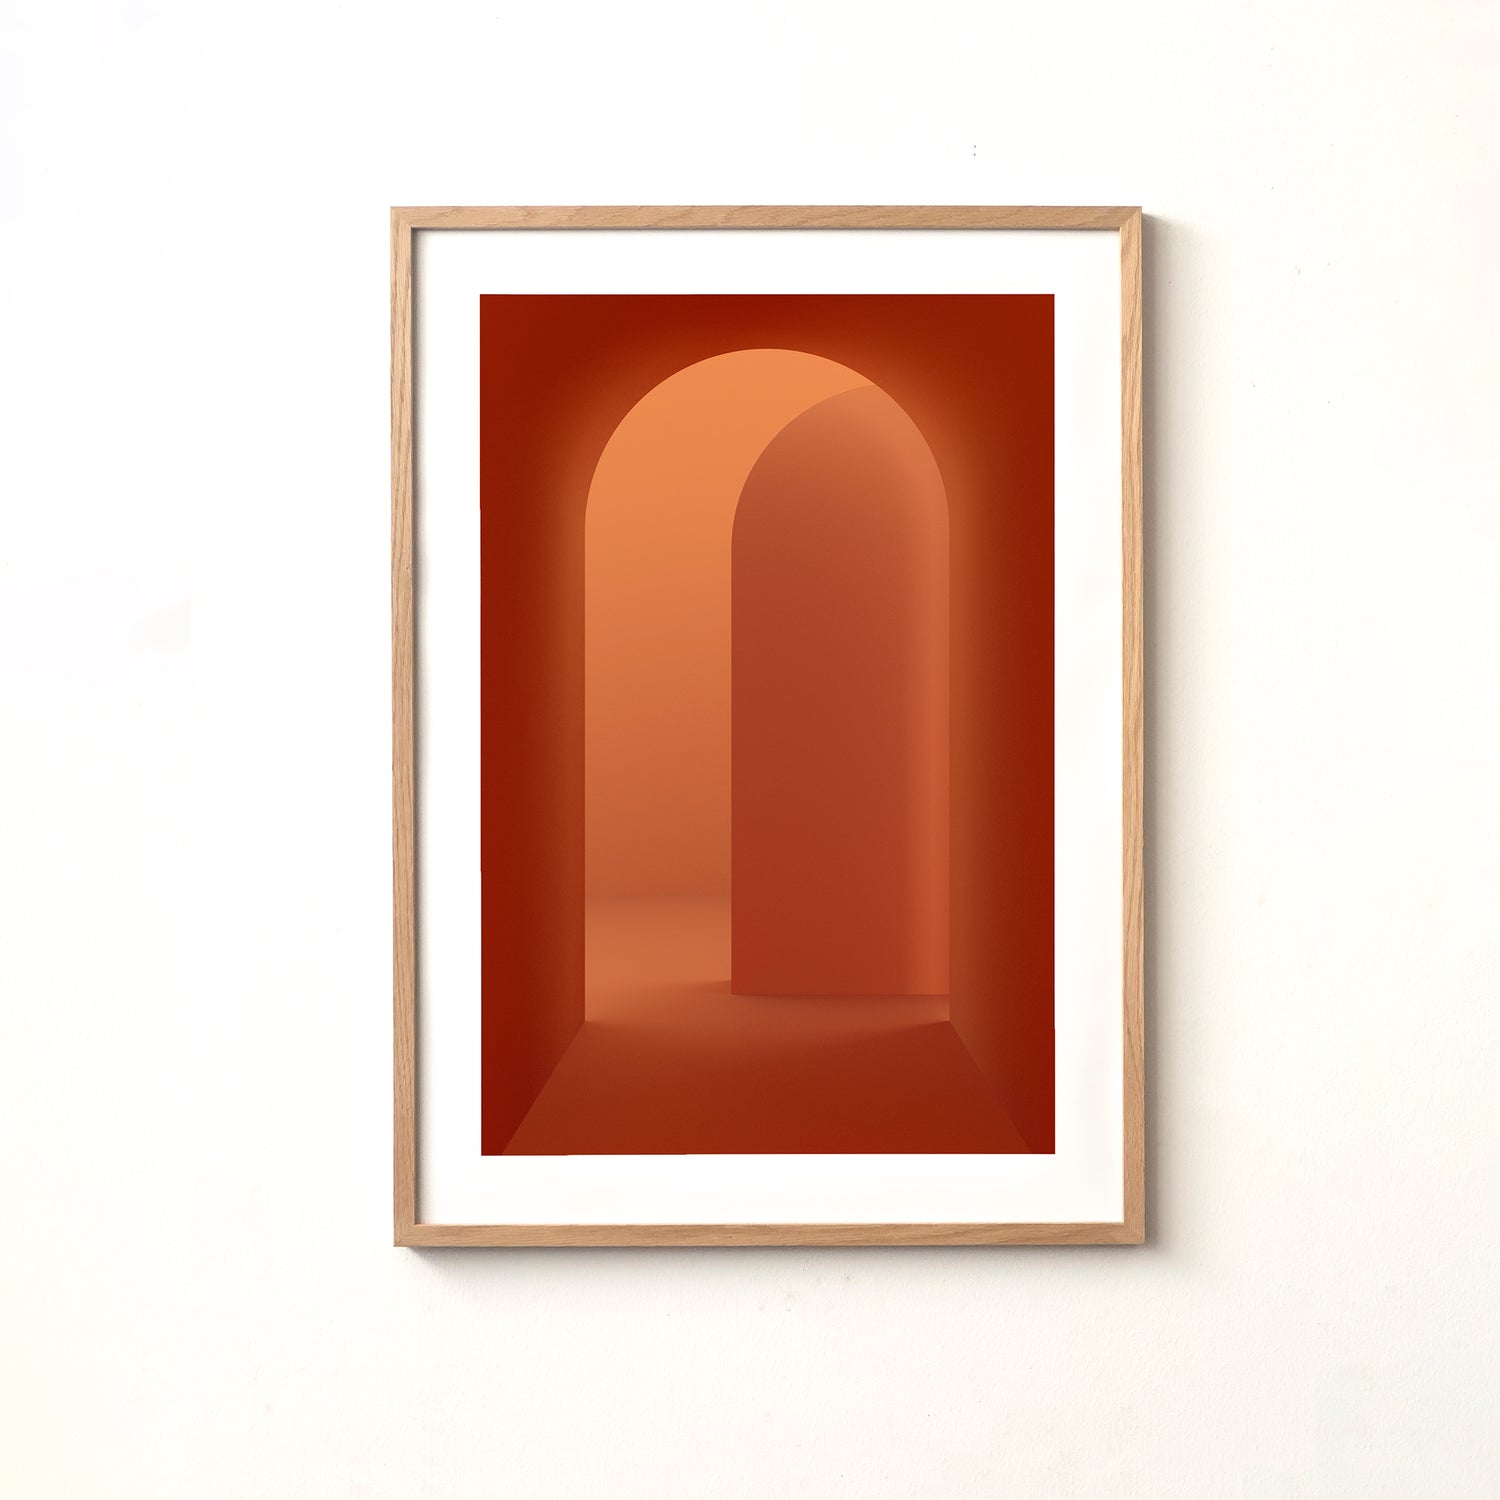 Kunstdruck im Bilderrahmen, Motiv rot monochromer Rundbogen, Titel Terra I, Baukunst Rene Kersting, Köln